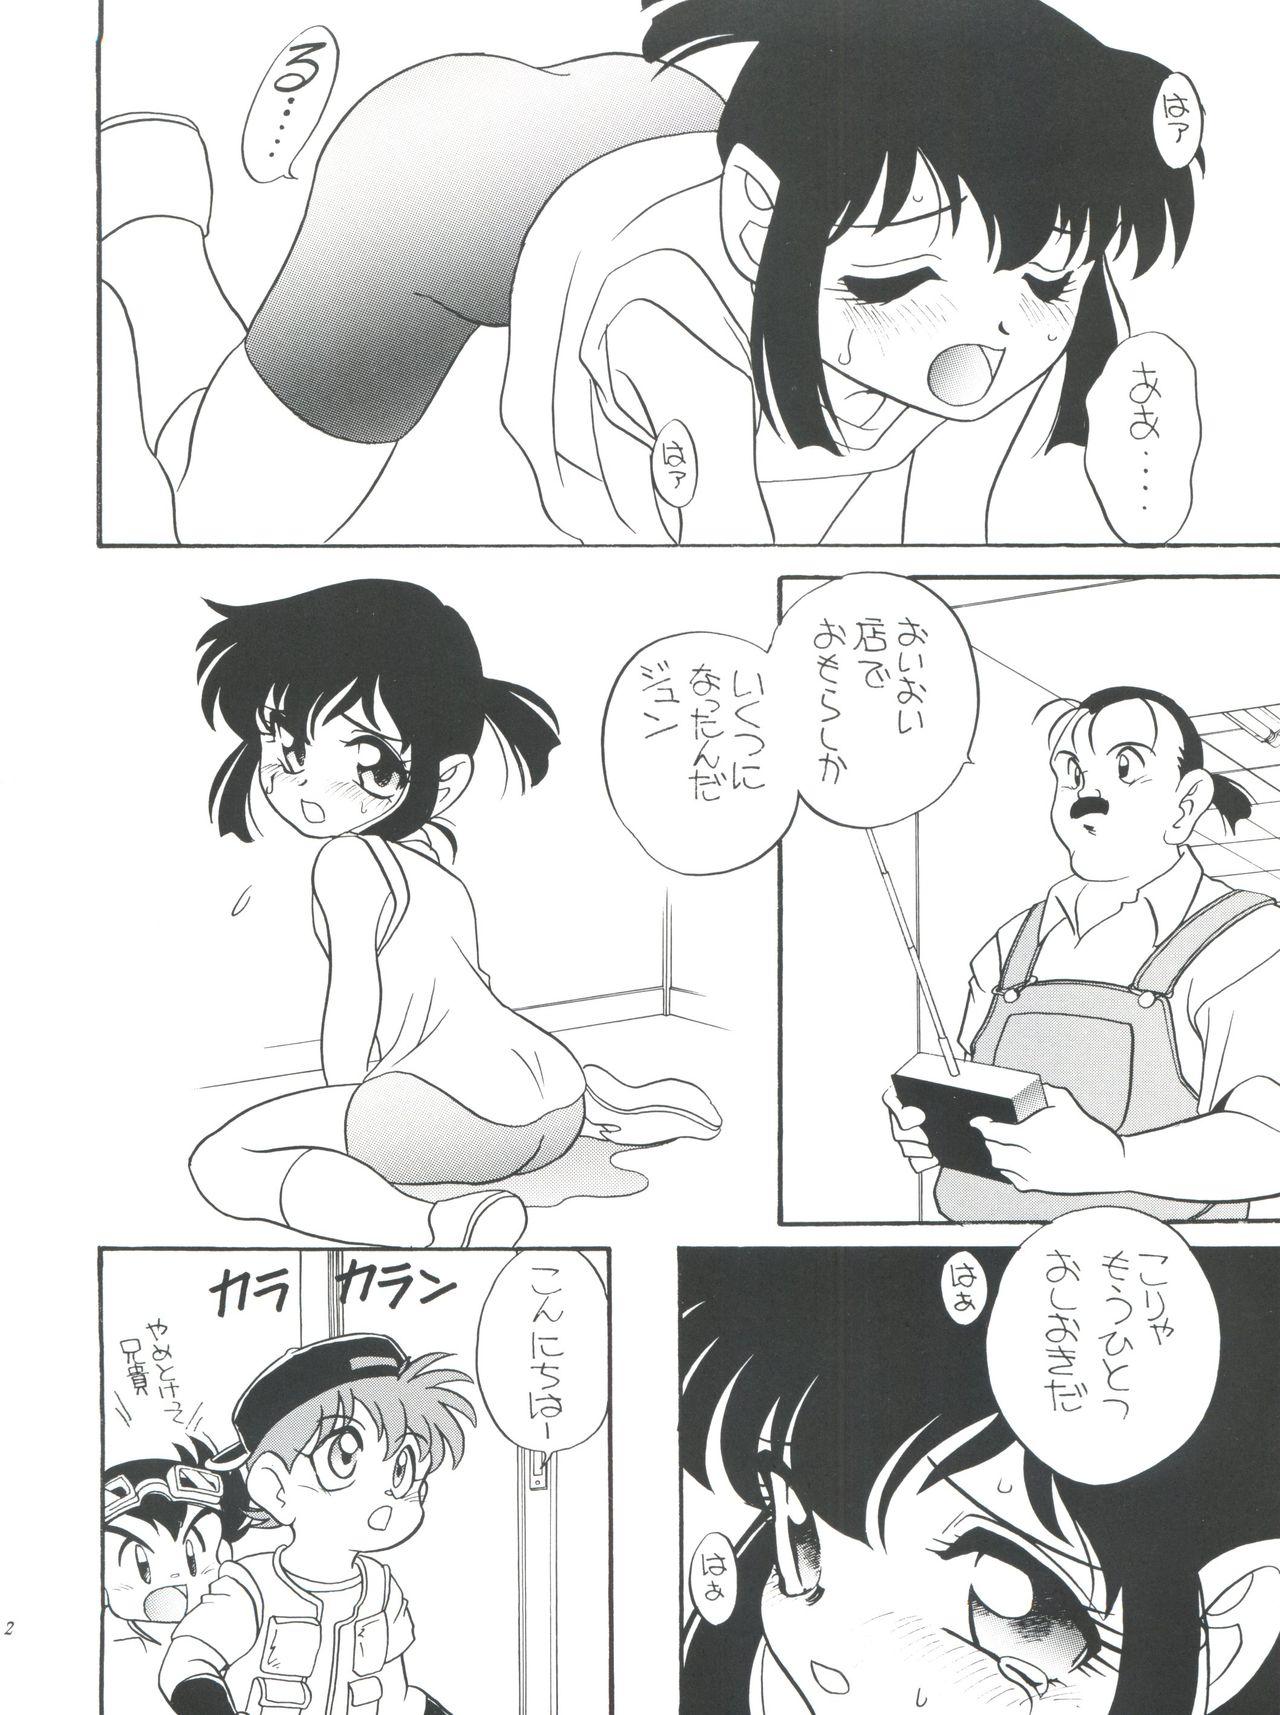 Mistress Elfin 14 - Bakusou kyoudai lets and go Dirty - Page 11